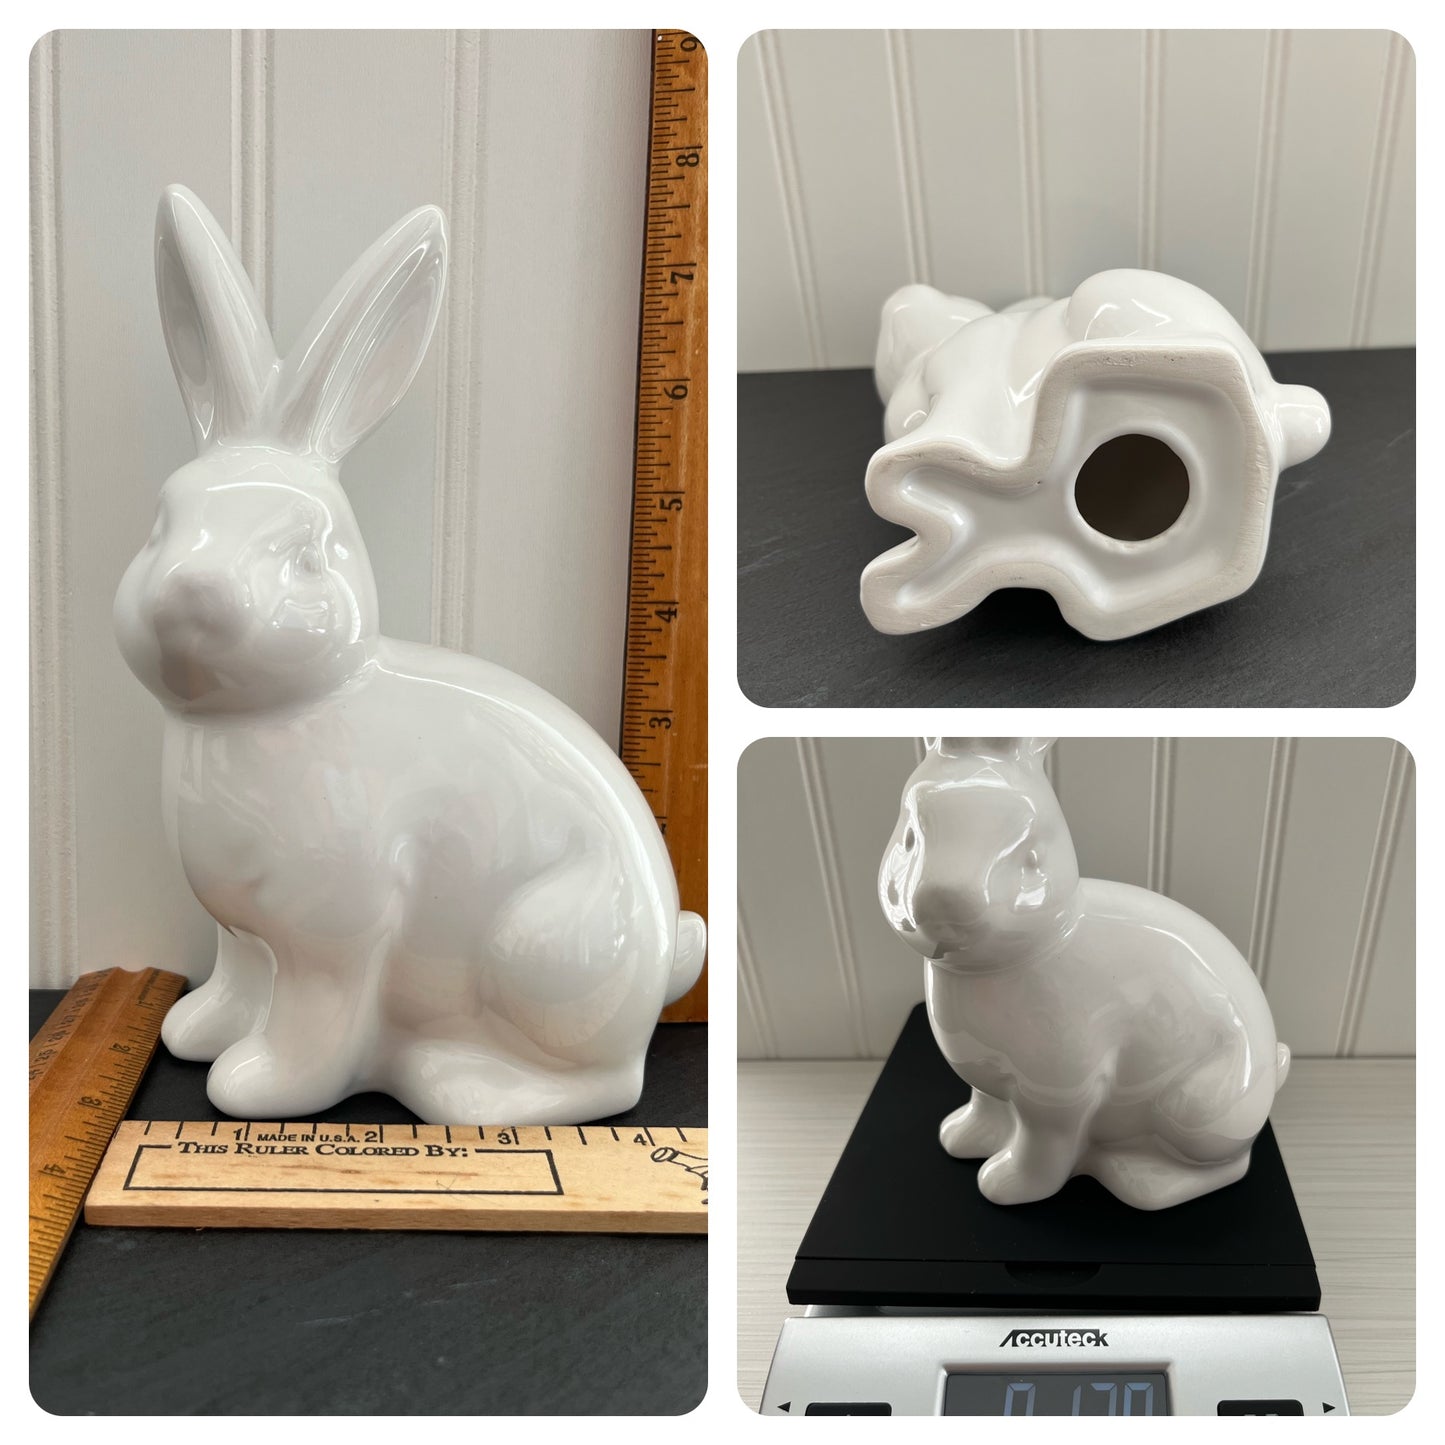 Vintage Inspired Sitting White Ceramic Bunny Rabbit - Charming Decor Accent